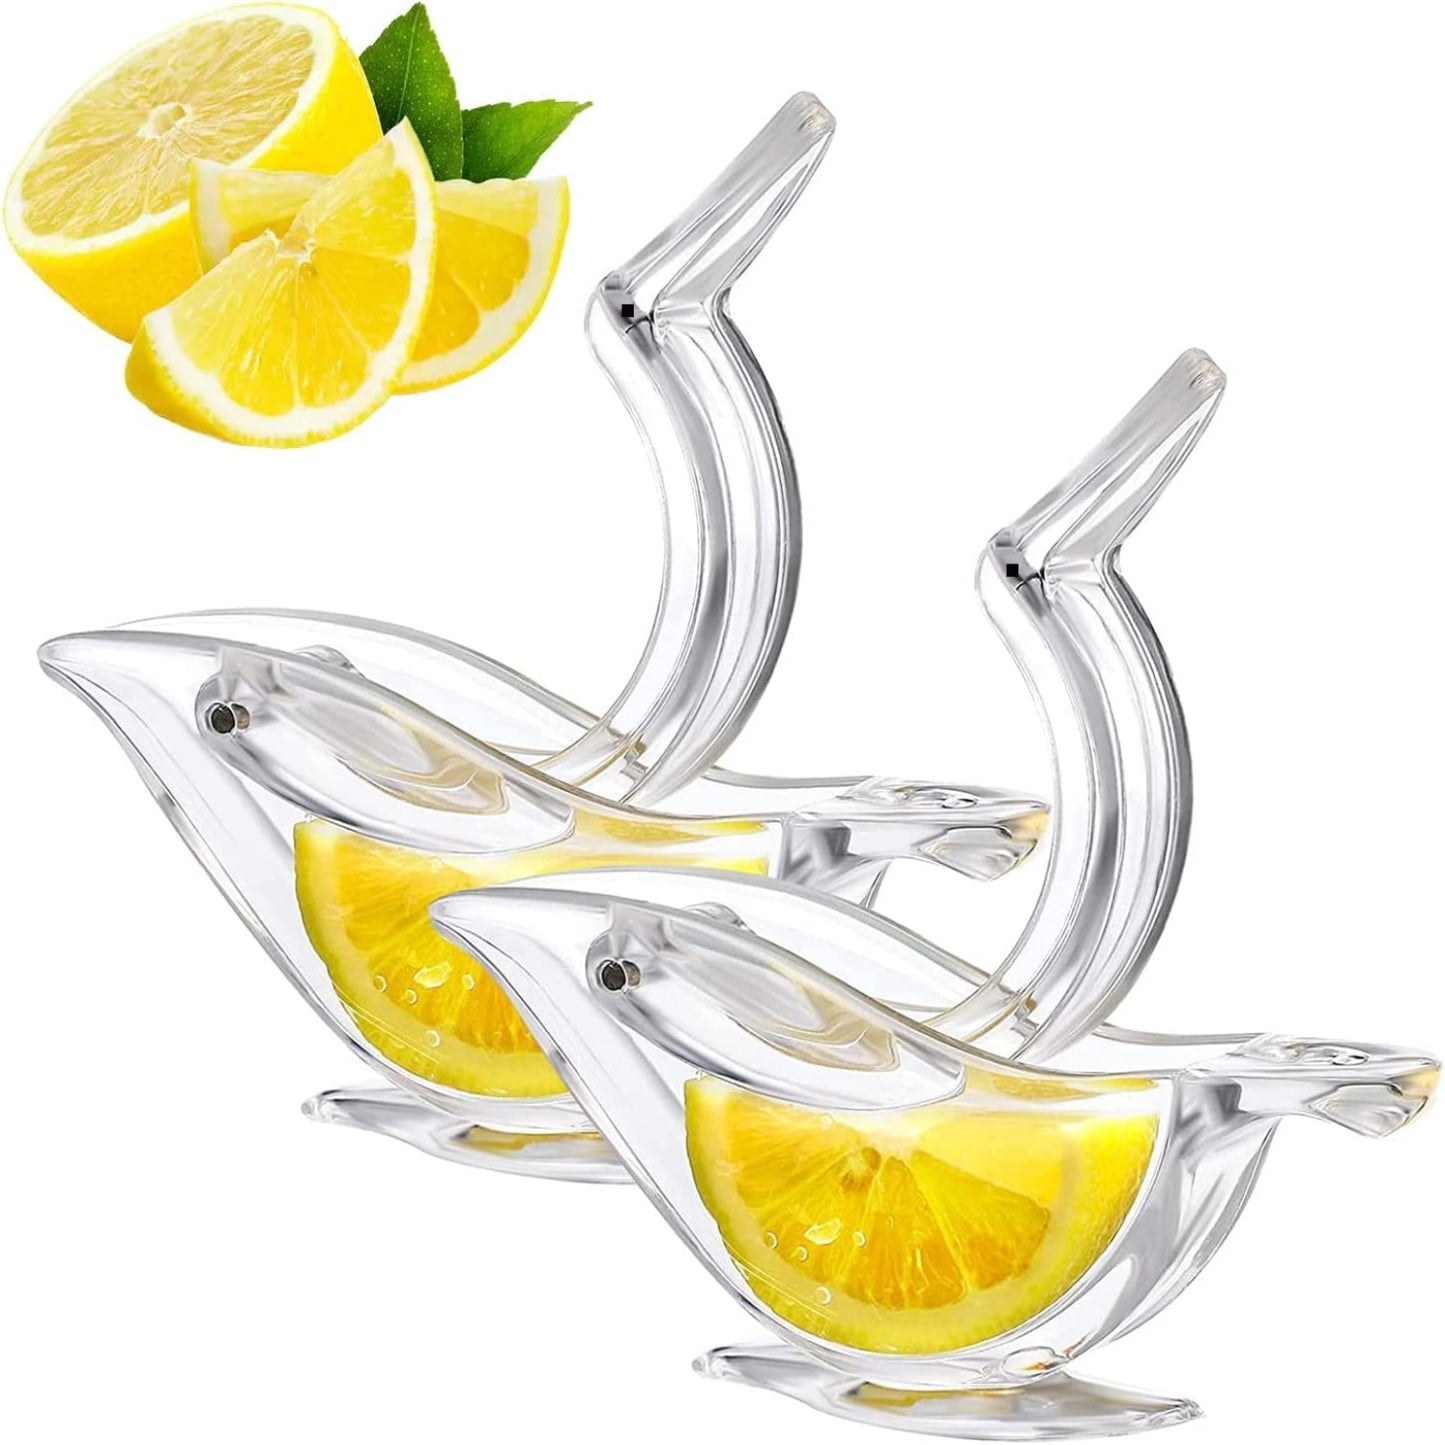 Transparent bird-shaped lemon squeezers